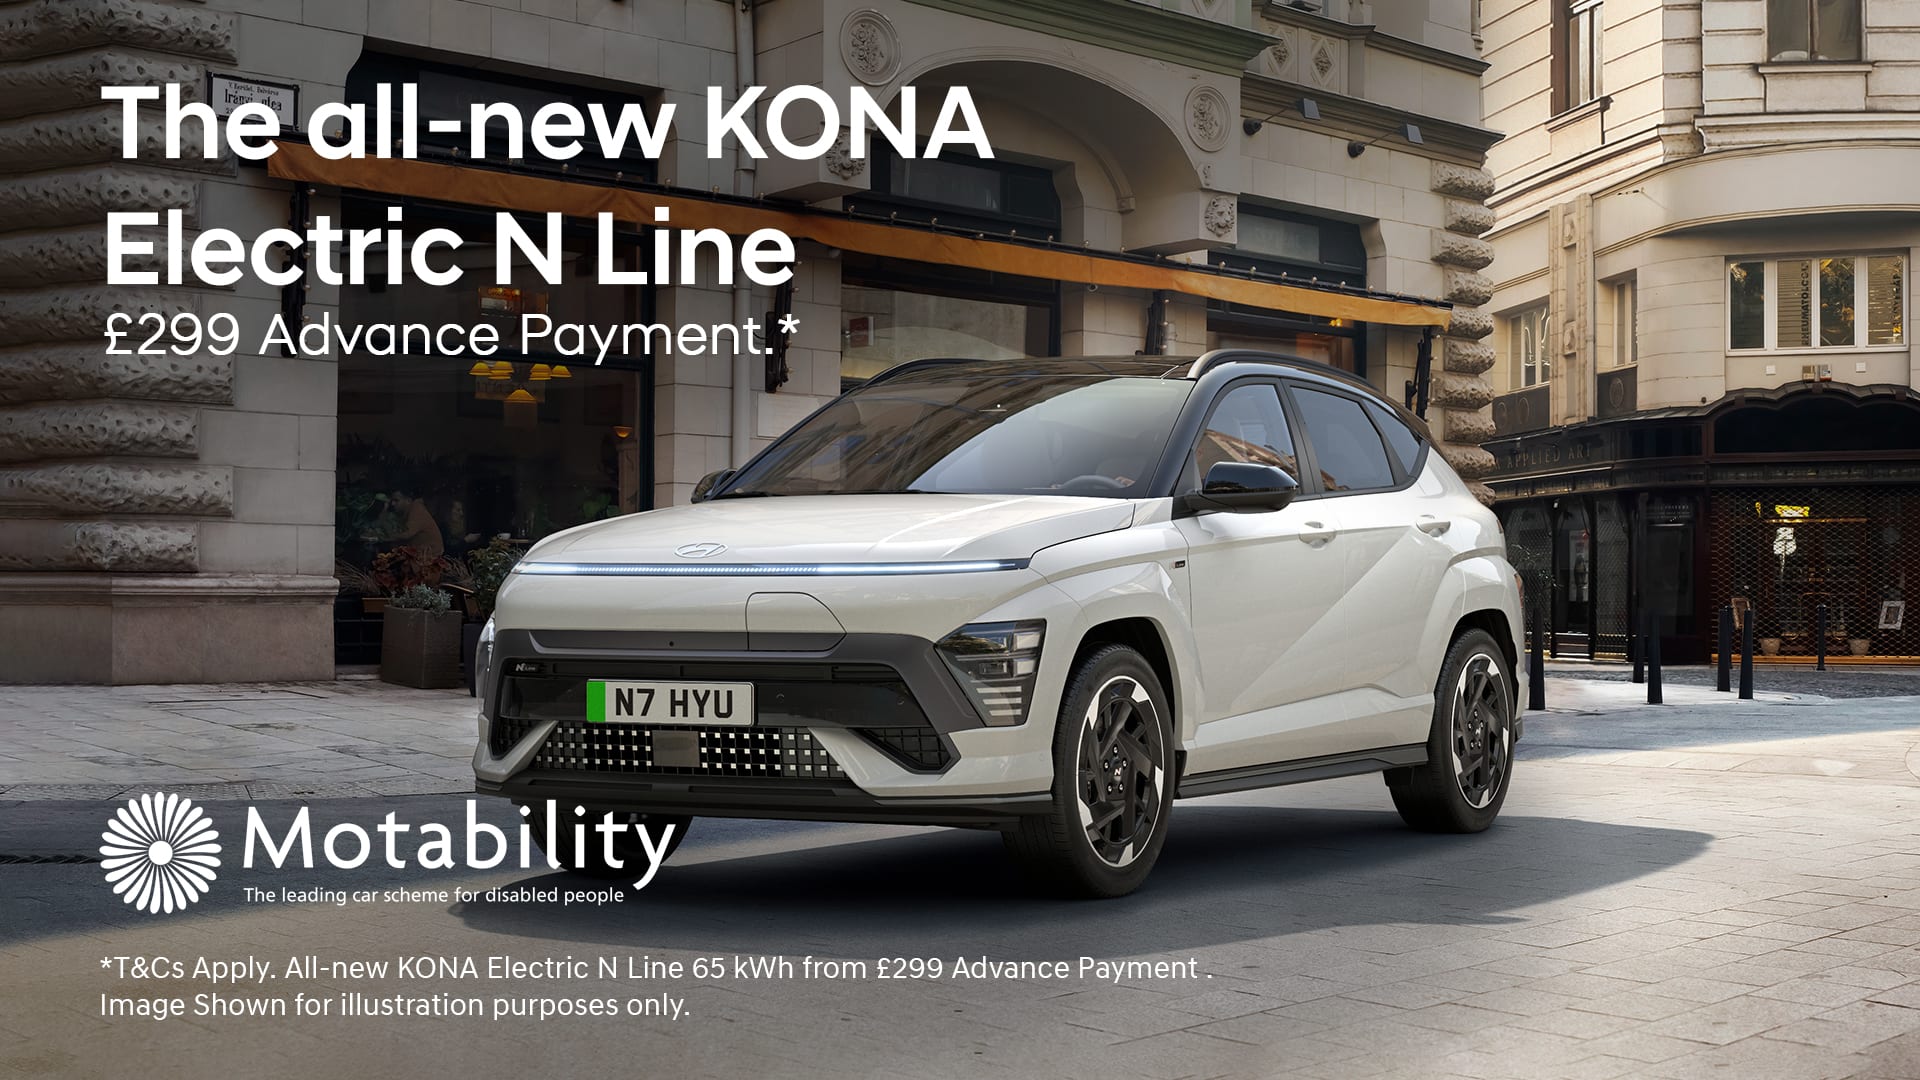 The all-new KONA Electric N Line Motability 